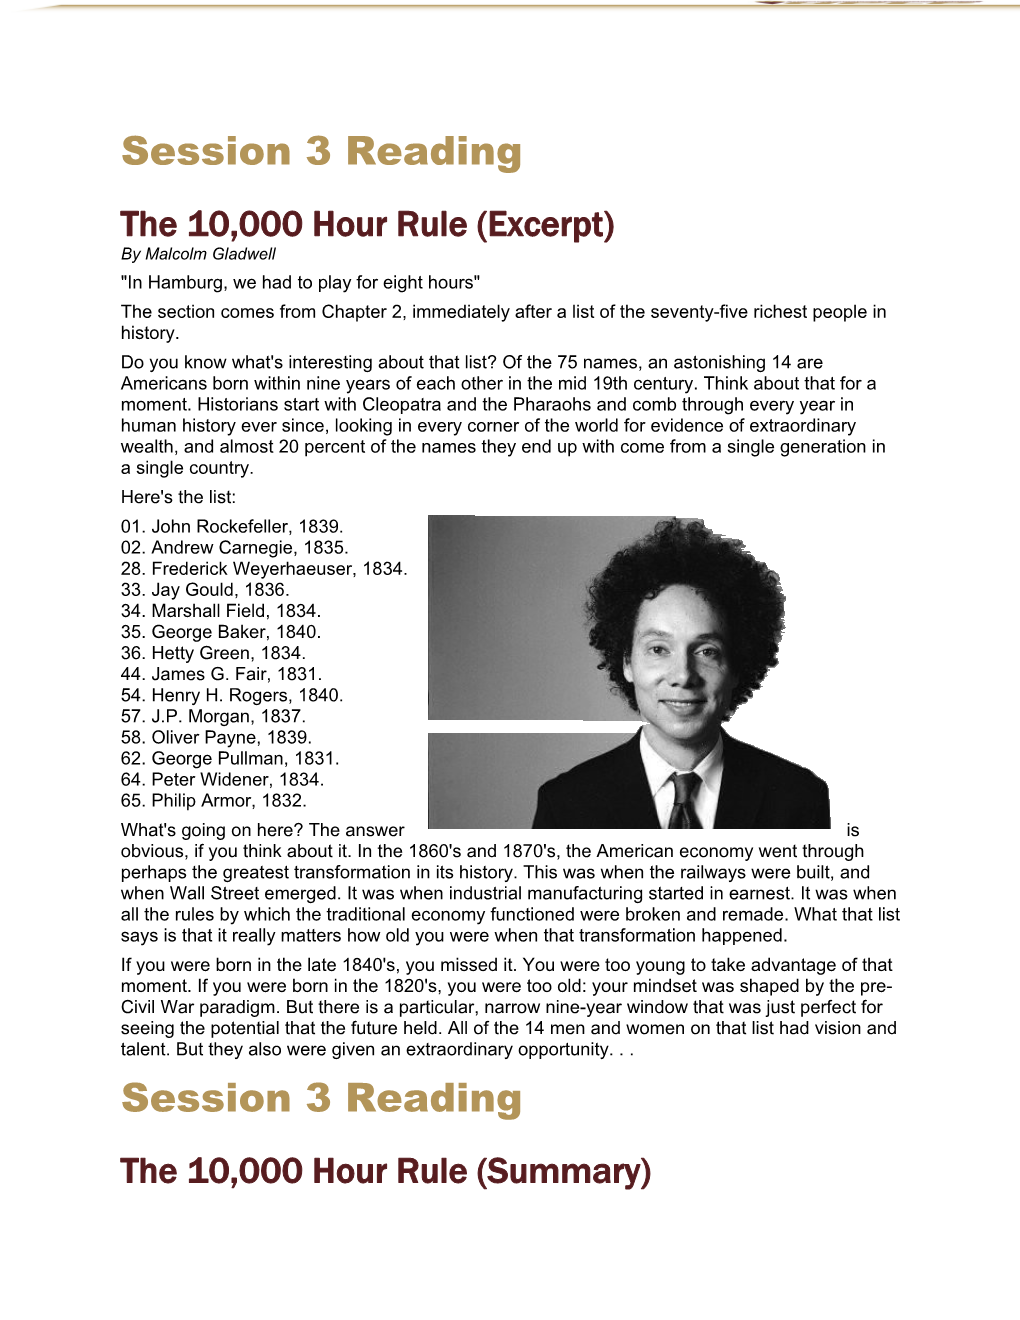 The 10,000 Hour Rule (Excerpt)